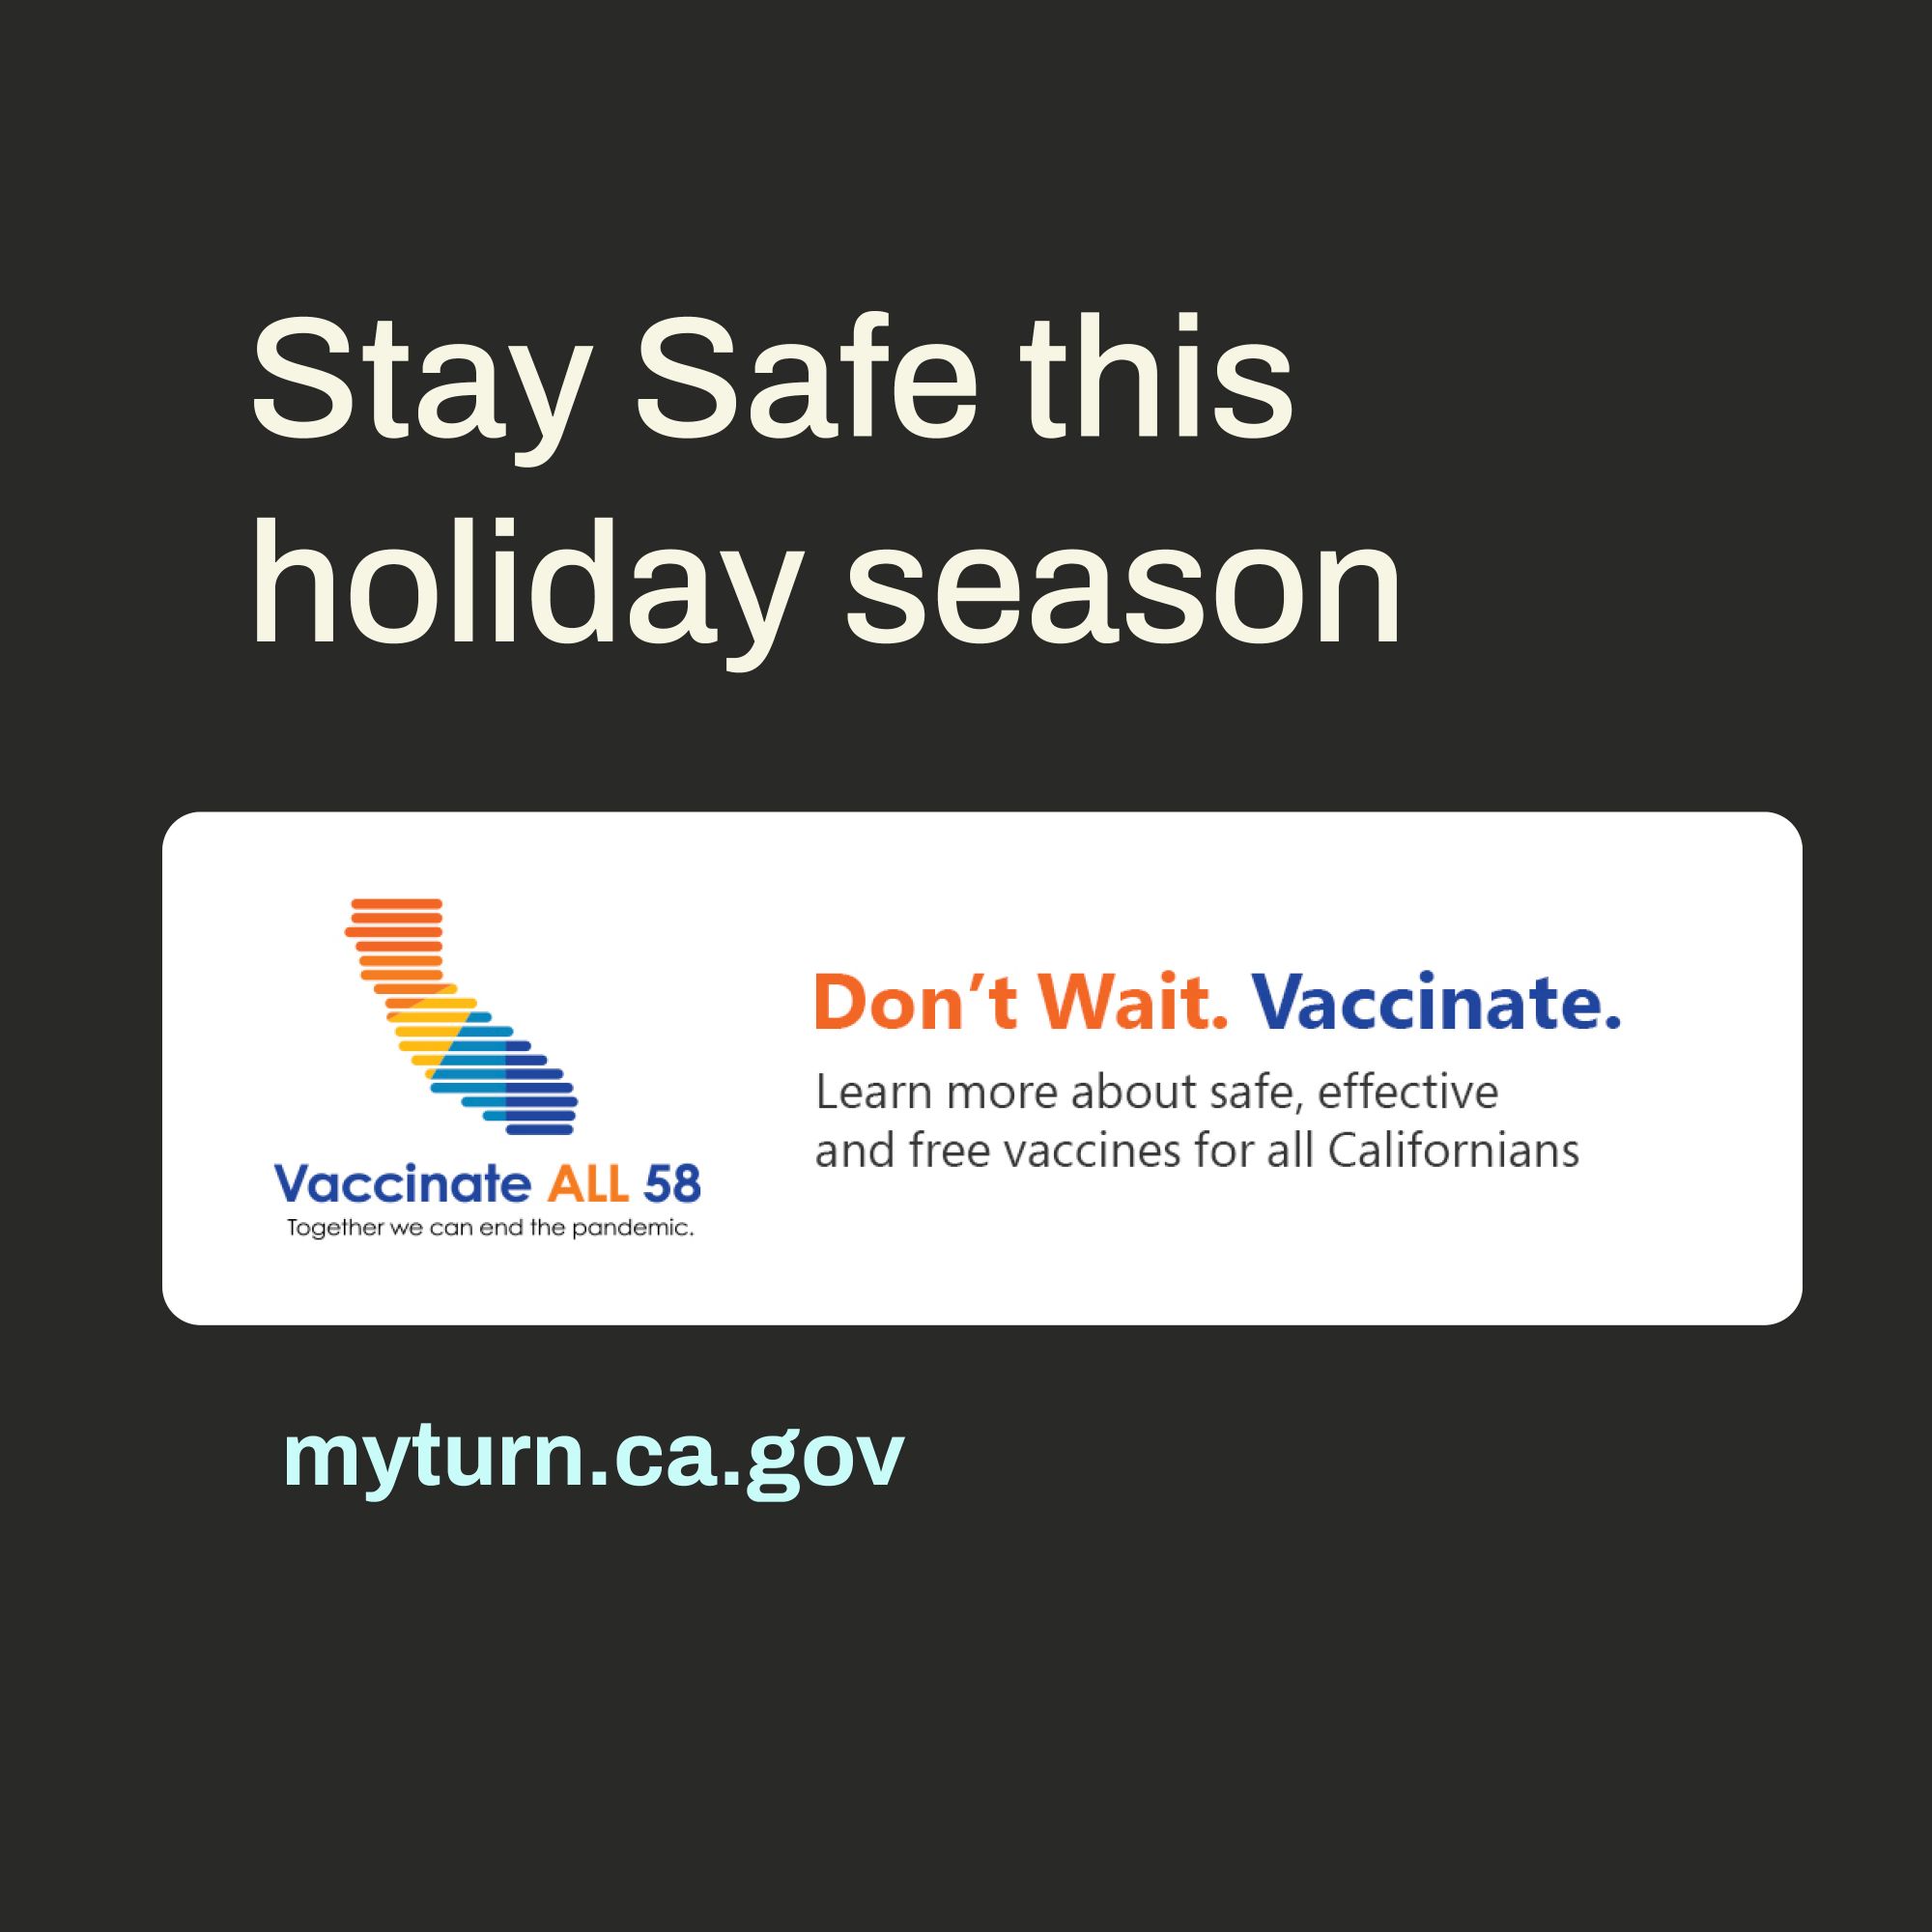 Decorative Text reading "Stay Safe this holiday season. myturn.ca.gov"